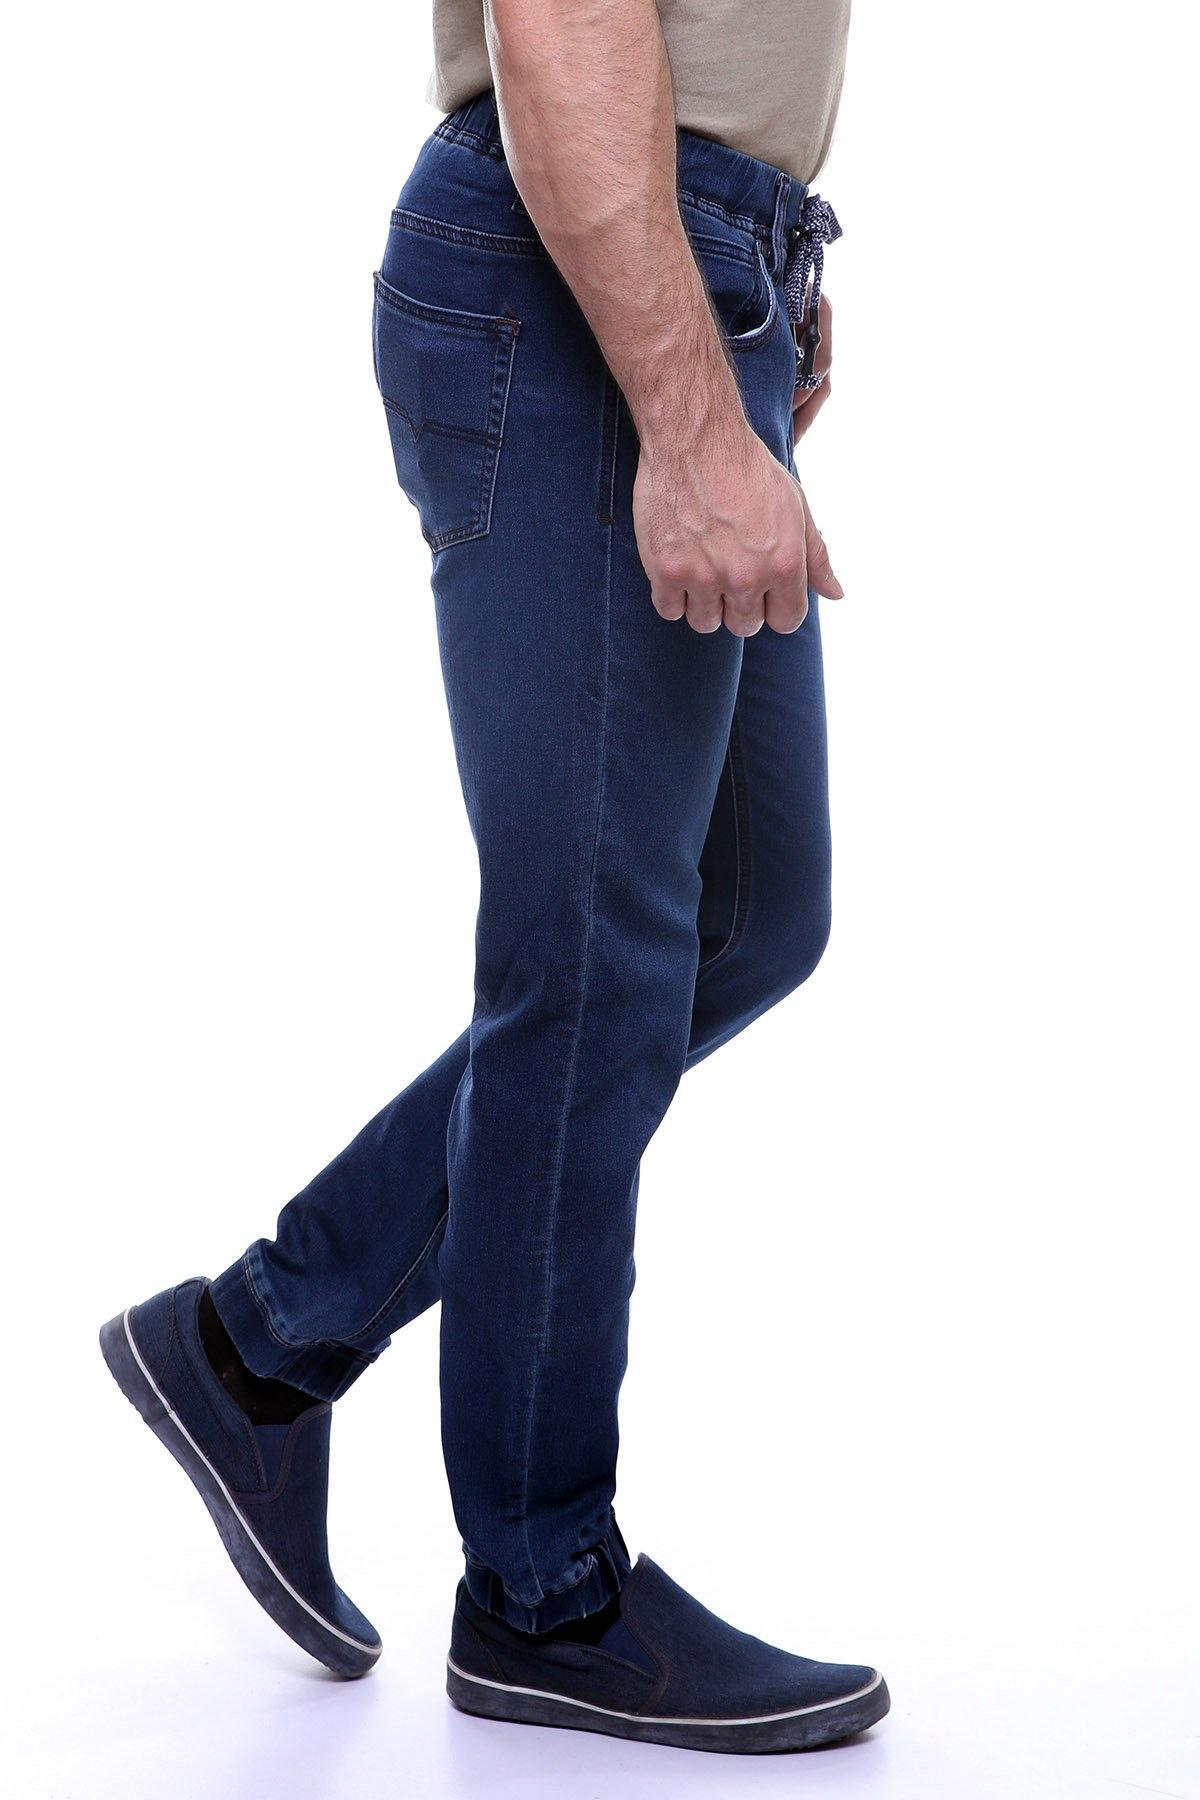 Jeans Trouser 5 Pocket Denim Blue at Charcoal Clothing